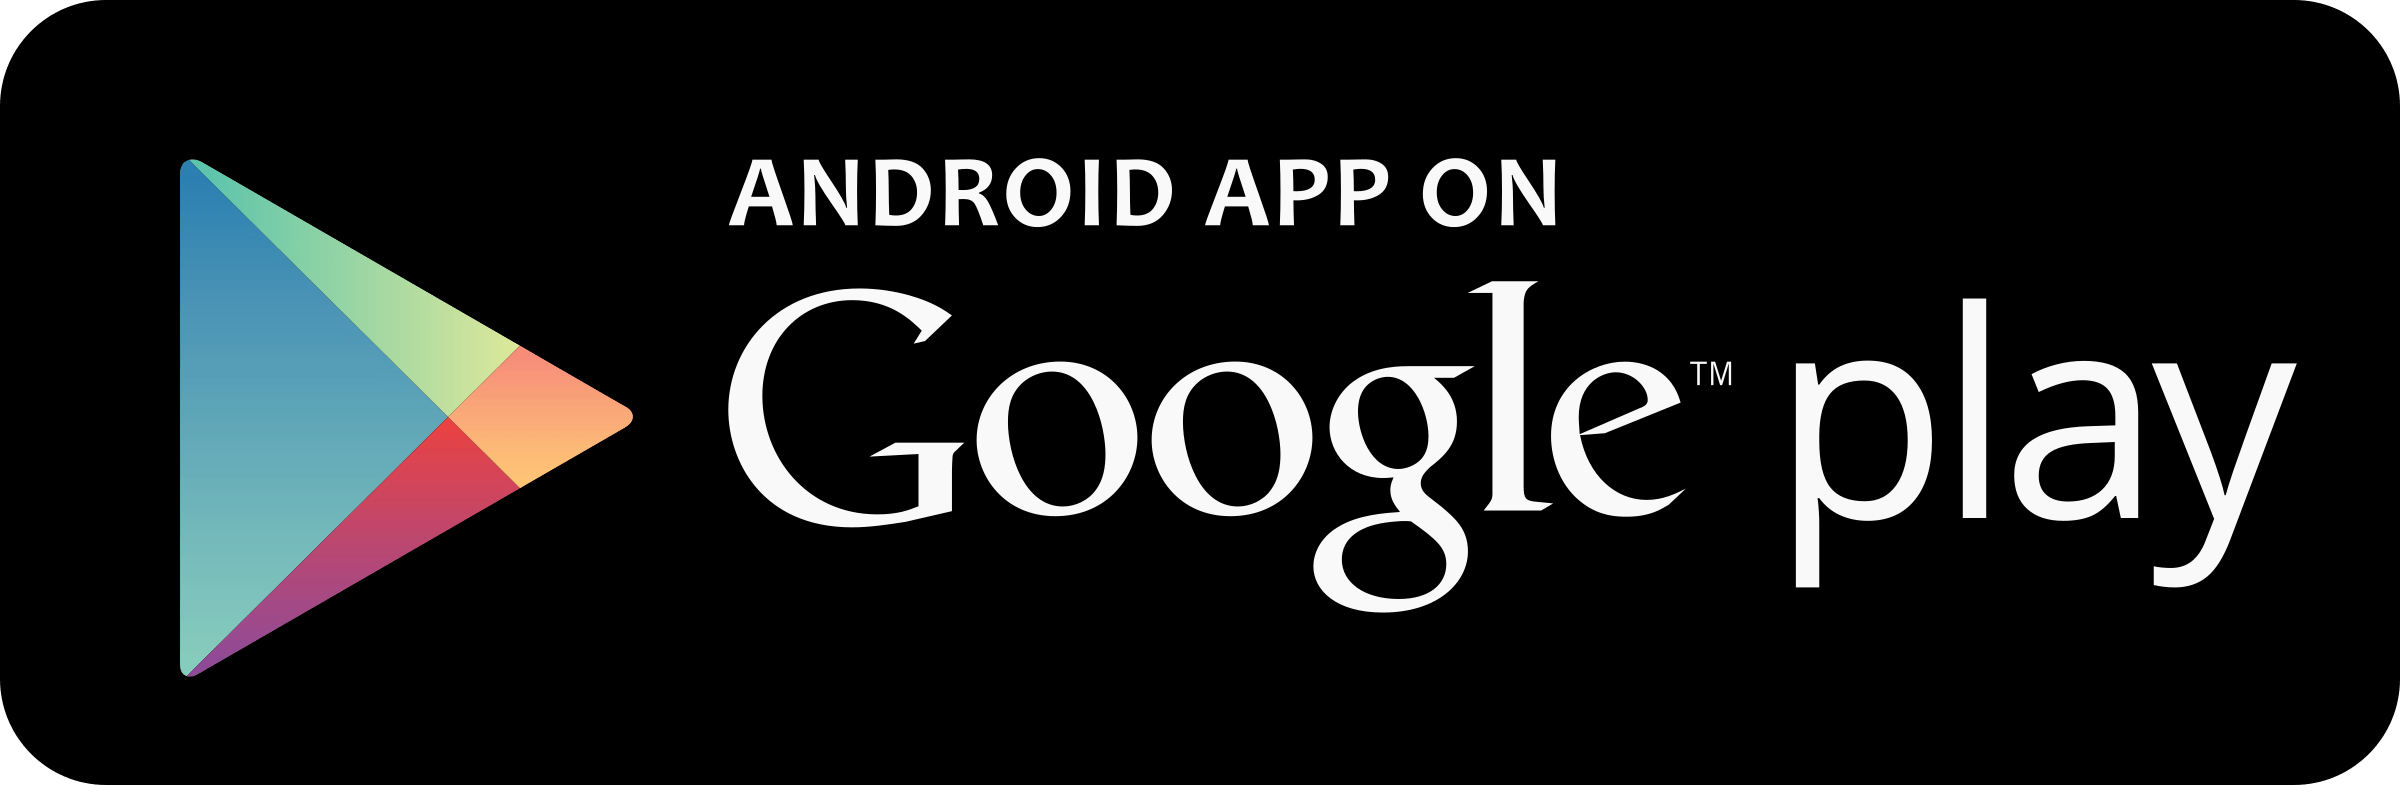 spirital Android app free download